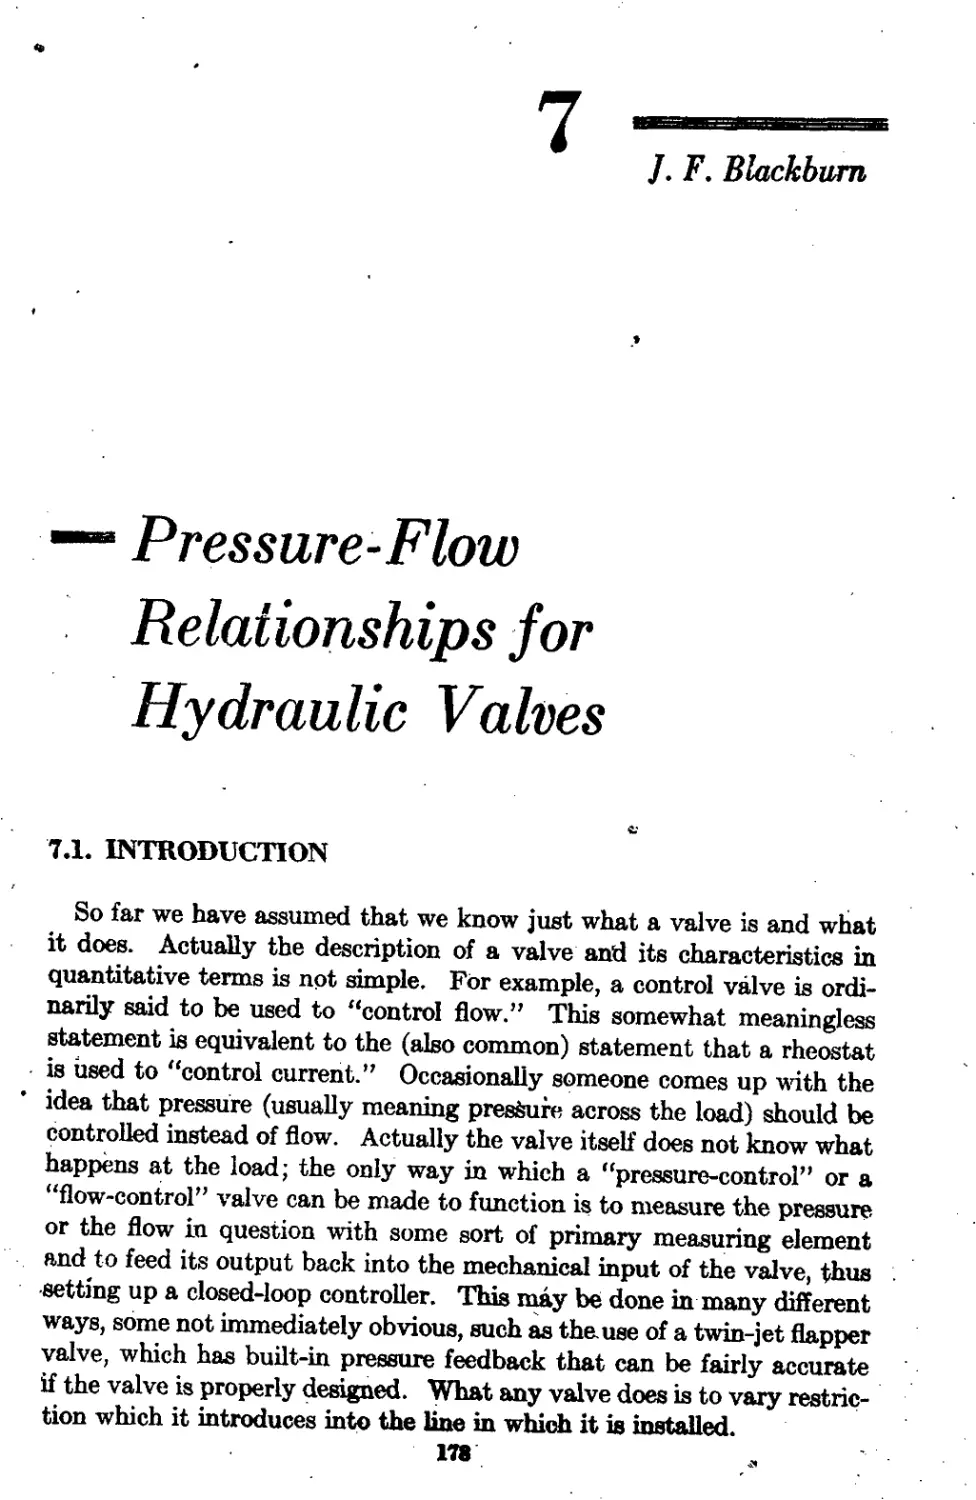 Chapter 7 Pressure-Flow Relationships for Hydraulic Valves: J.F. Blackburn